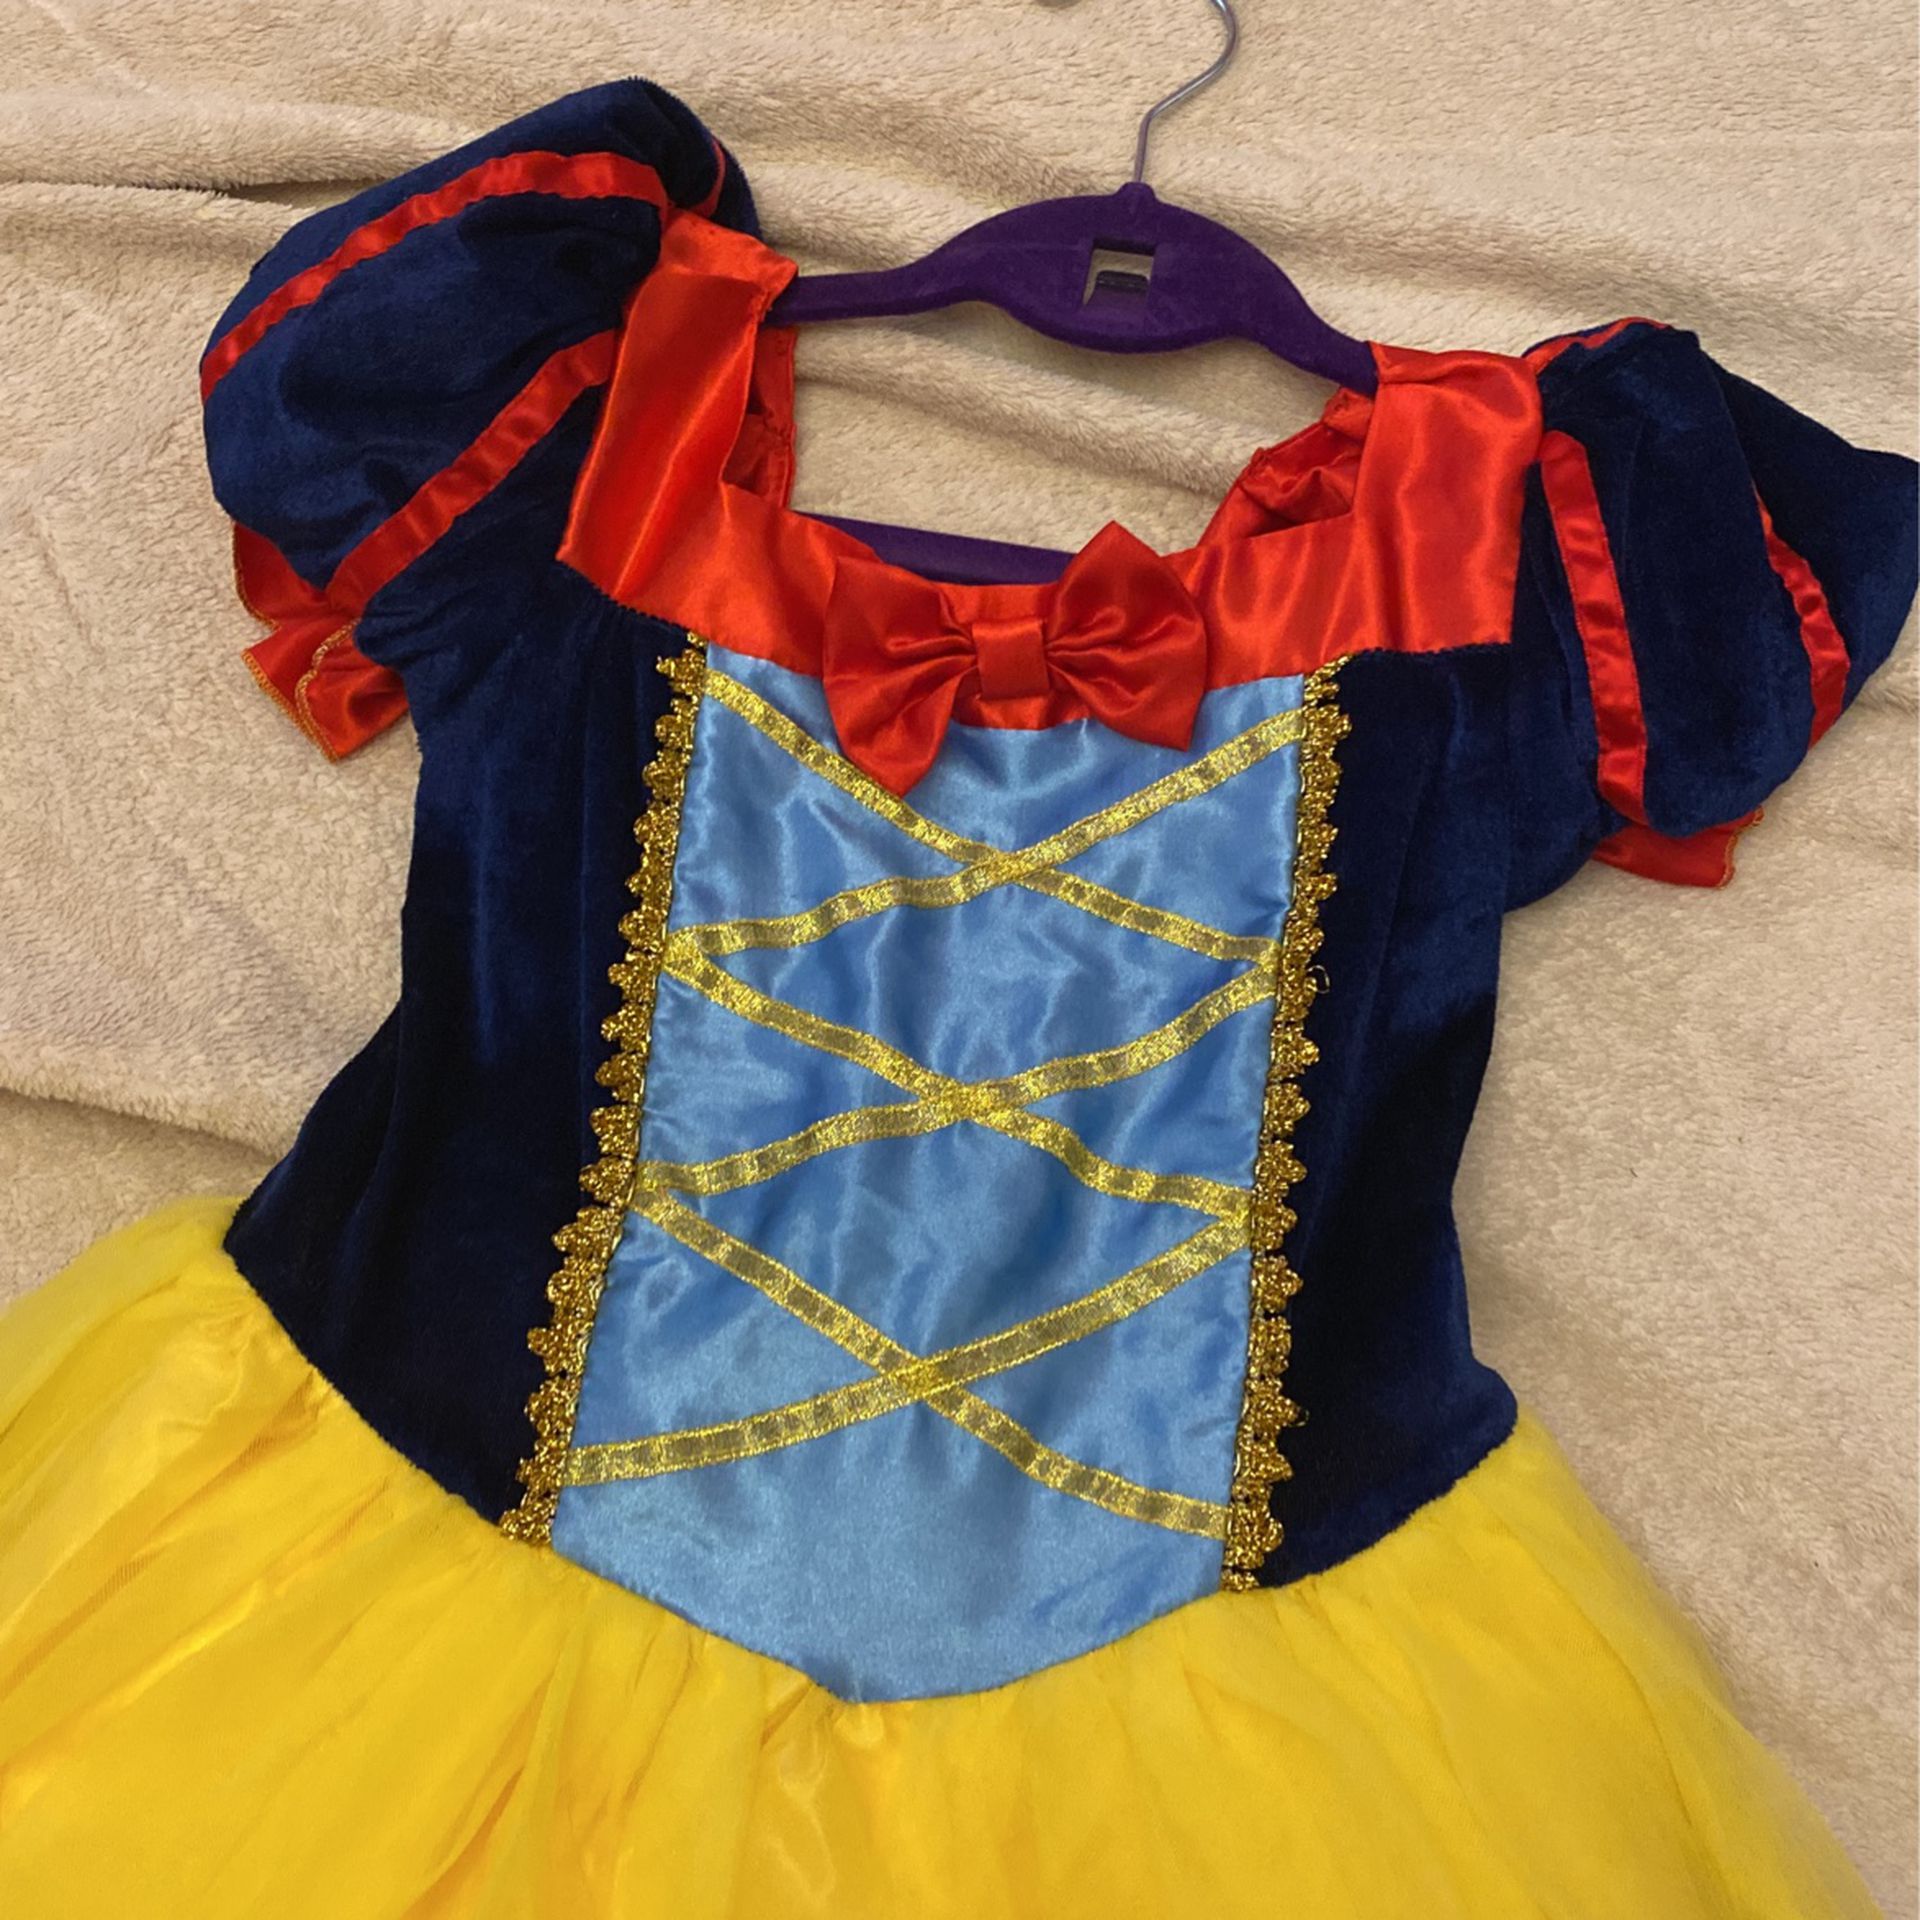 Cinderella Dress/ Costume